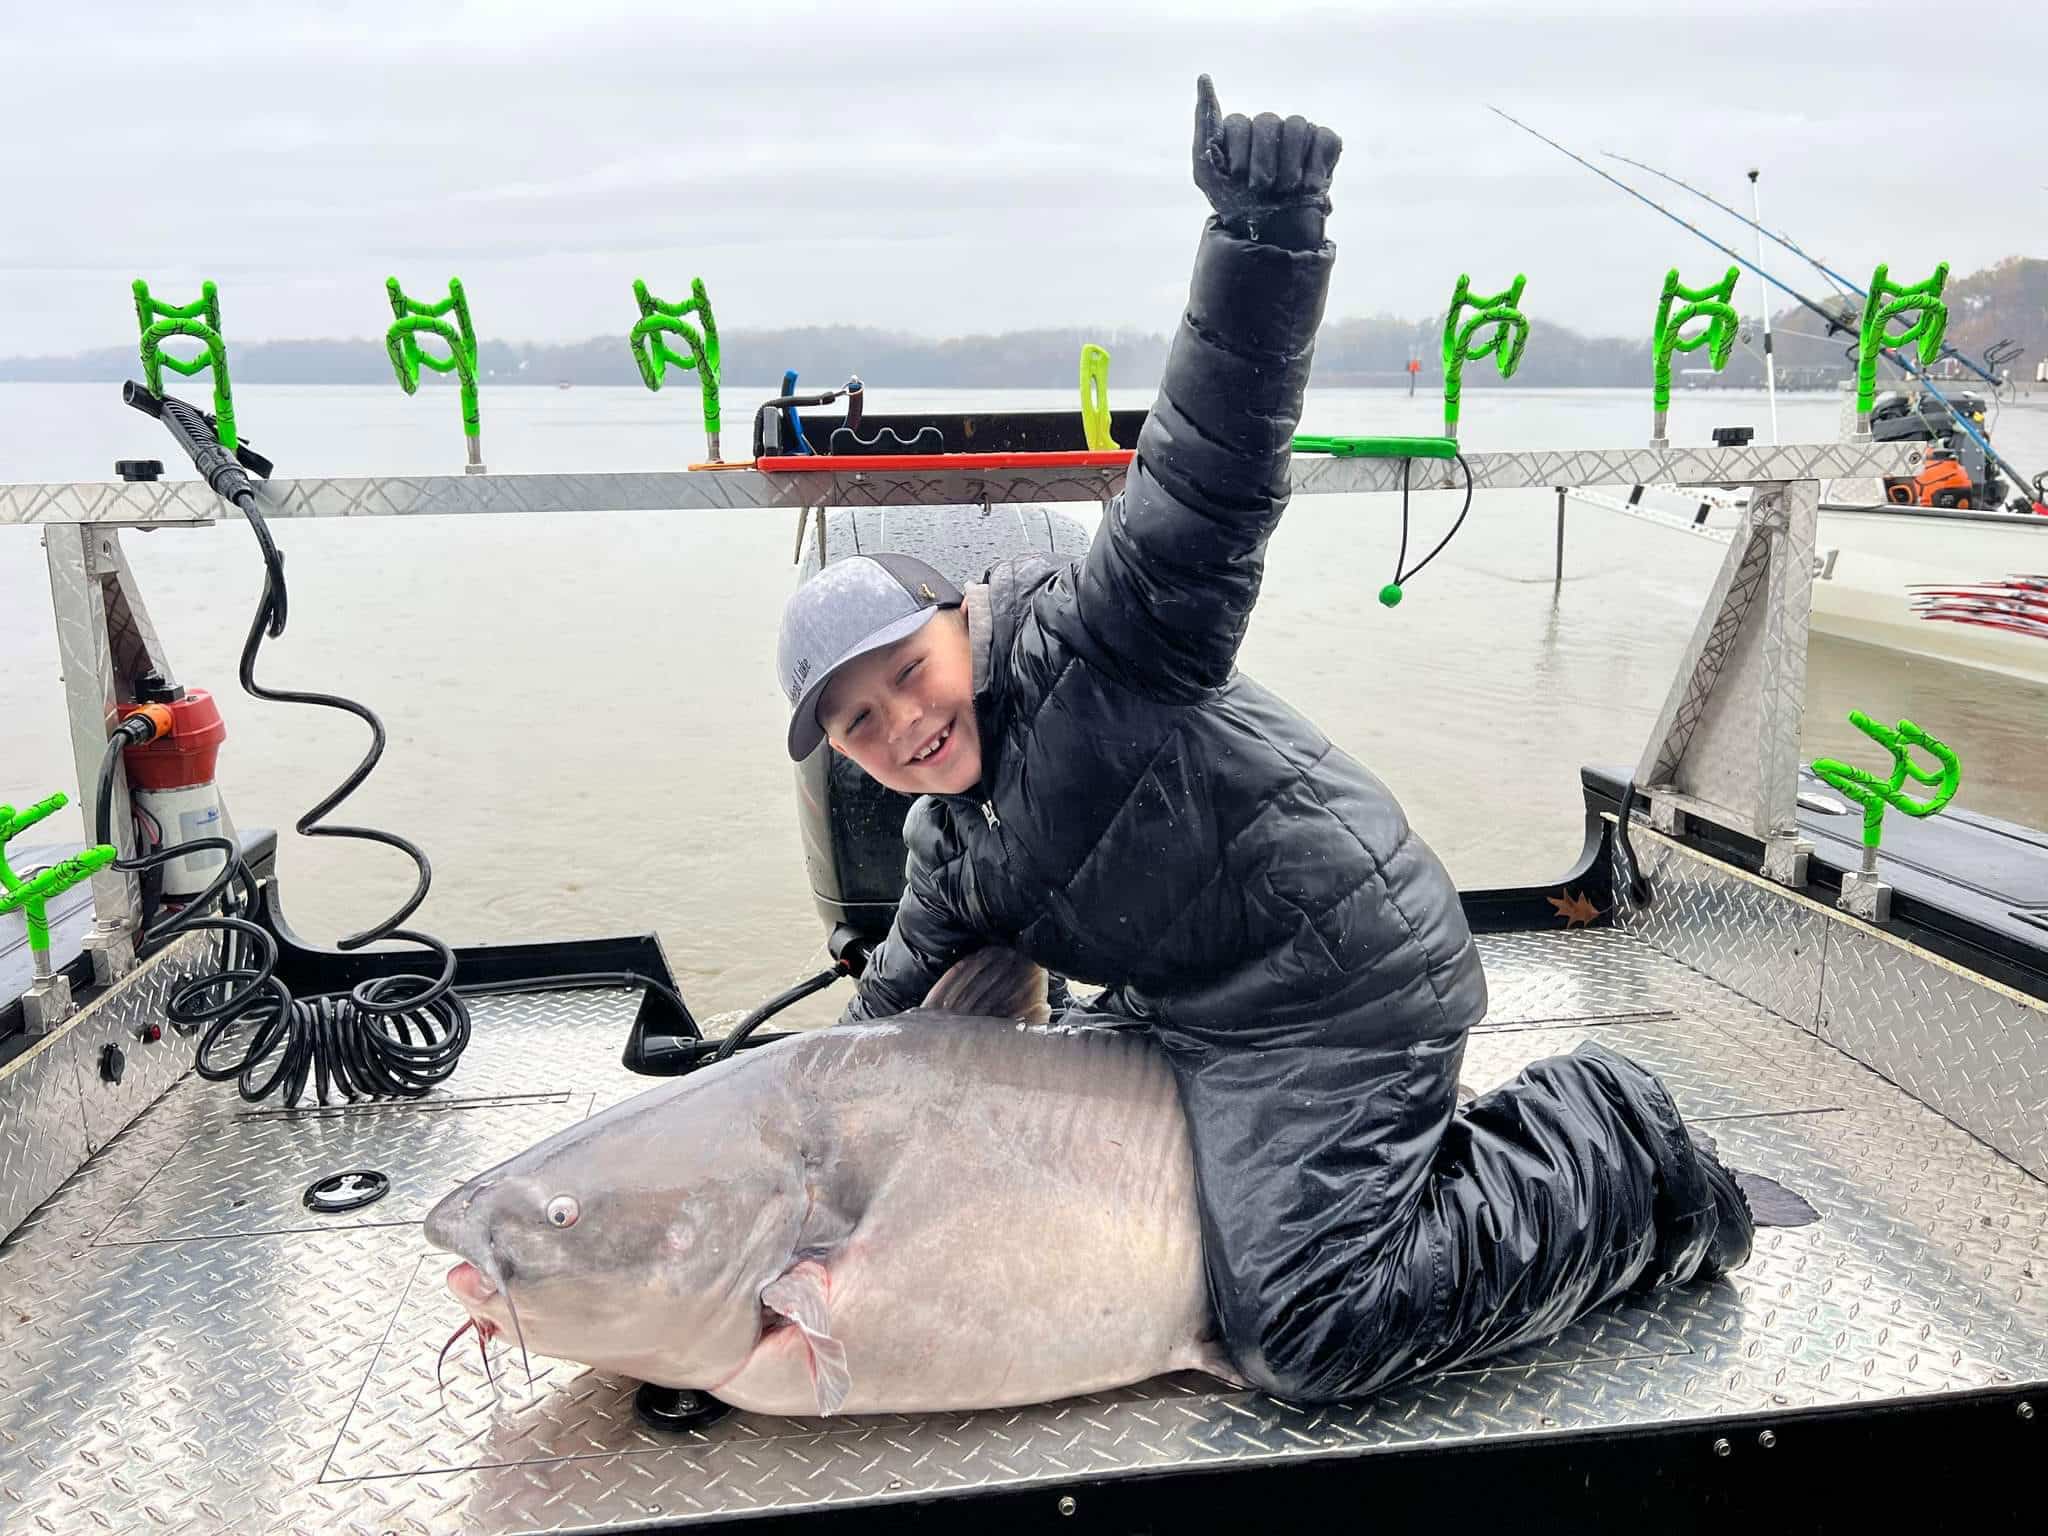 Flathead Luke” Lands Giant Blue Catfish From Virginia's James